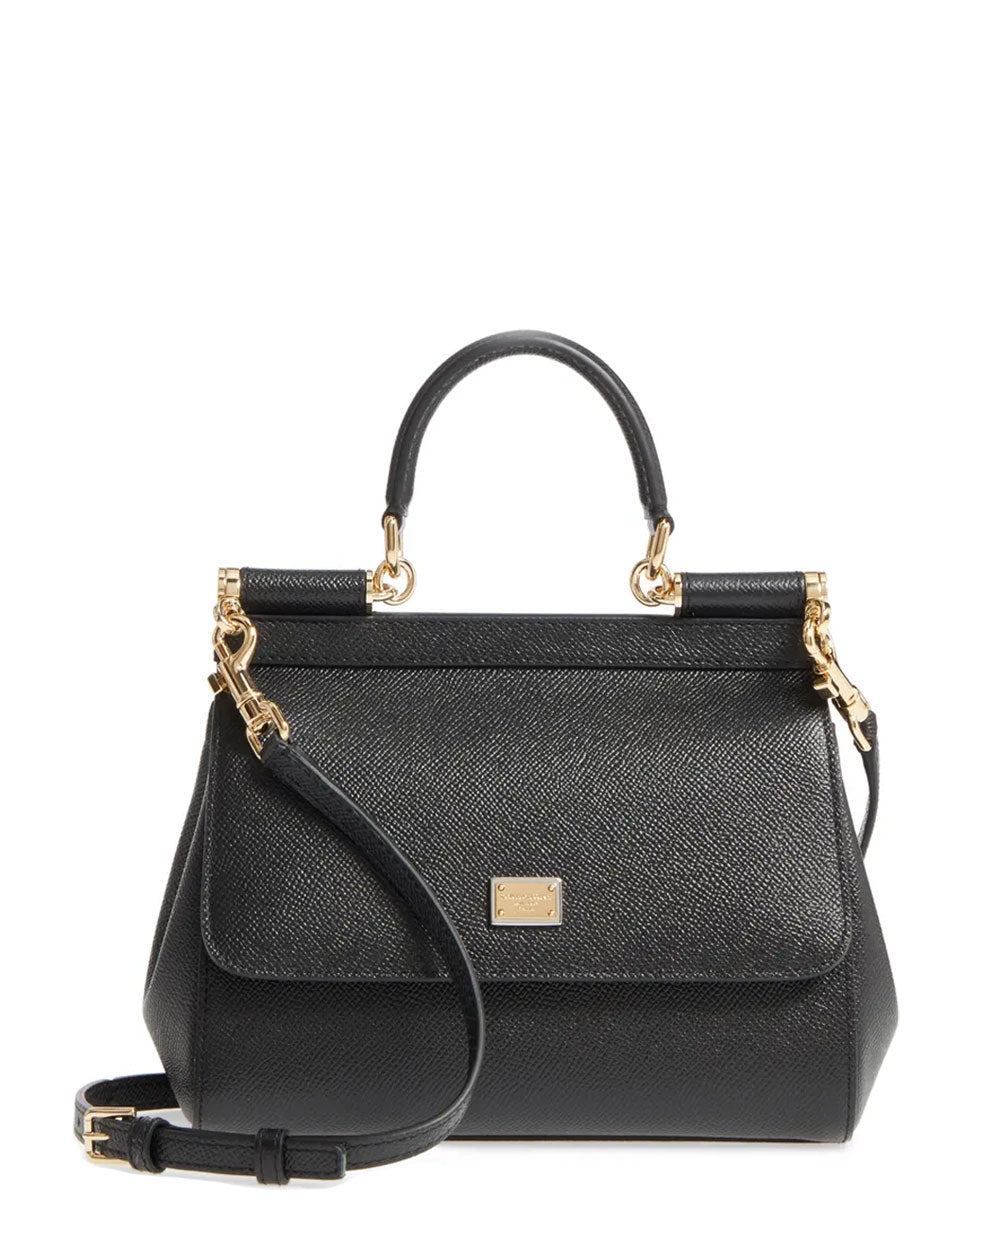 Dolce & Gabbana Sicily Small Leather Tote Bag in Black – Stanley Korshak